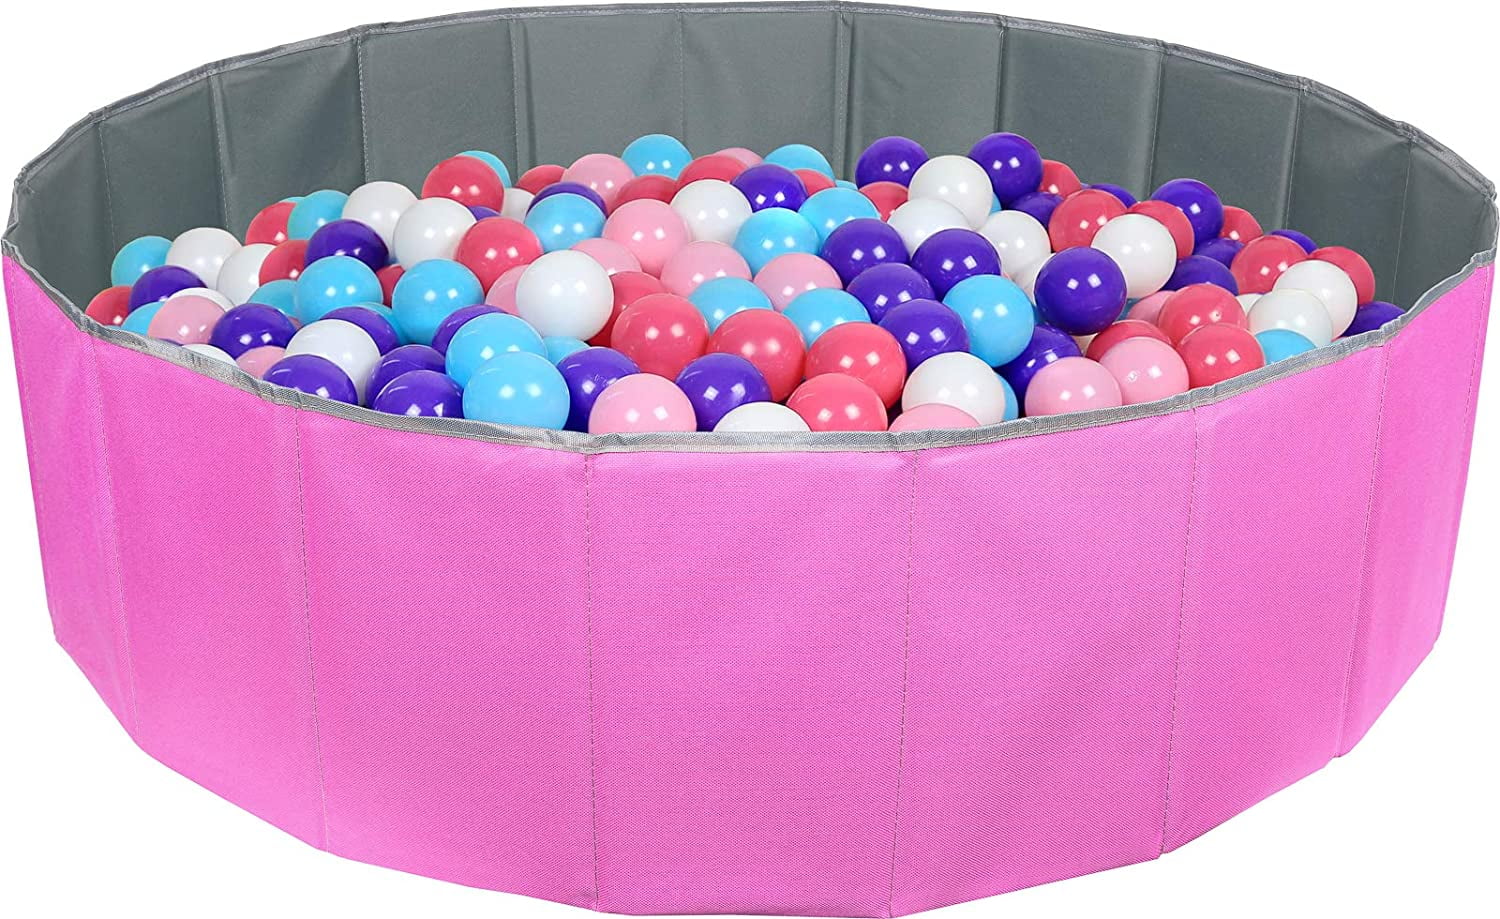 50pcs Colorful Plastic Ball Pit Balls Crush Proof Ocean Ball Toy Games Kids UK 